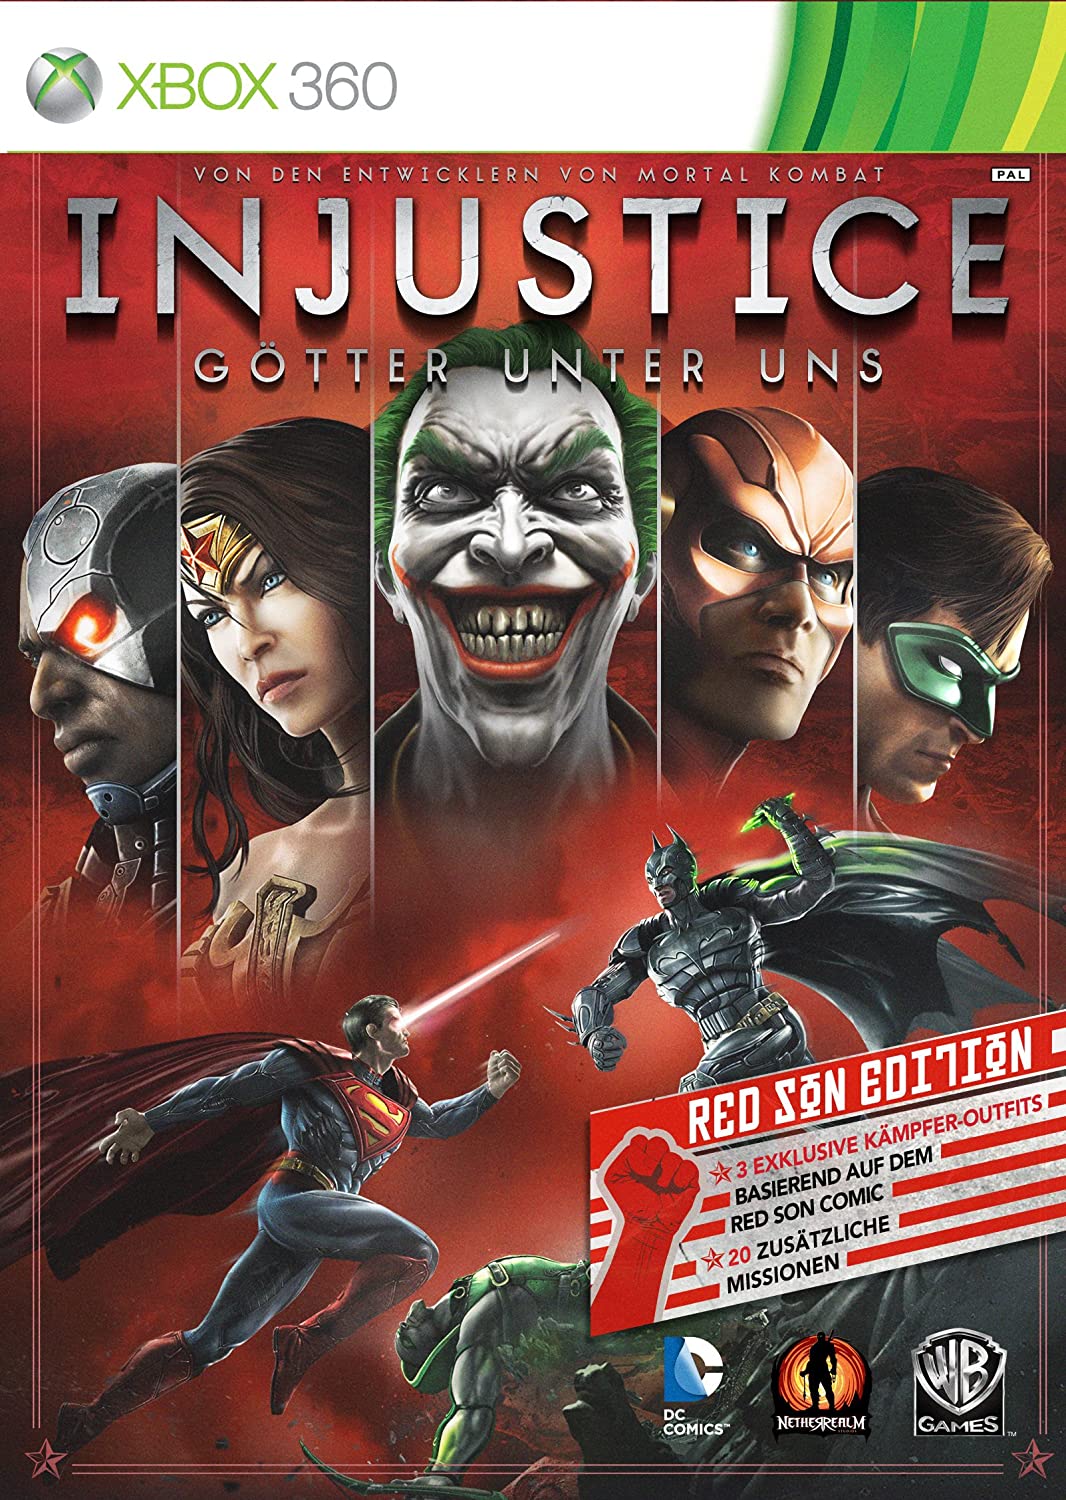 Injustice Gods Among Us Red Son Edition / Special Edition (német) - Xbox 360 Játékok